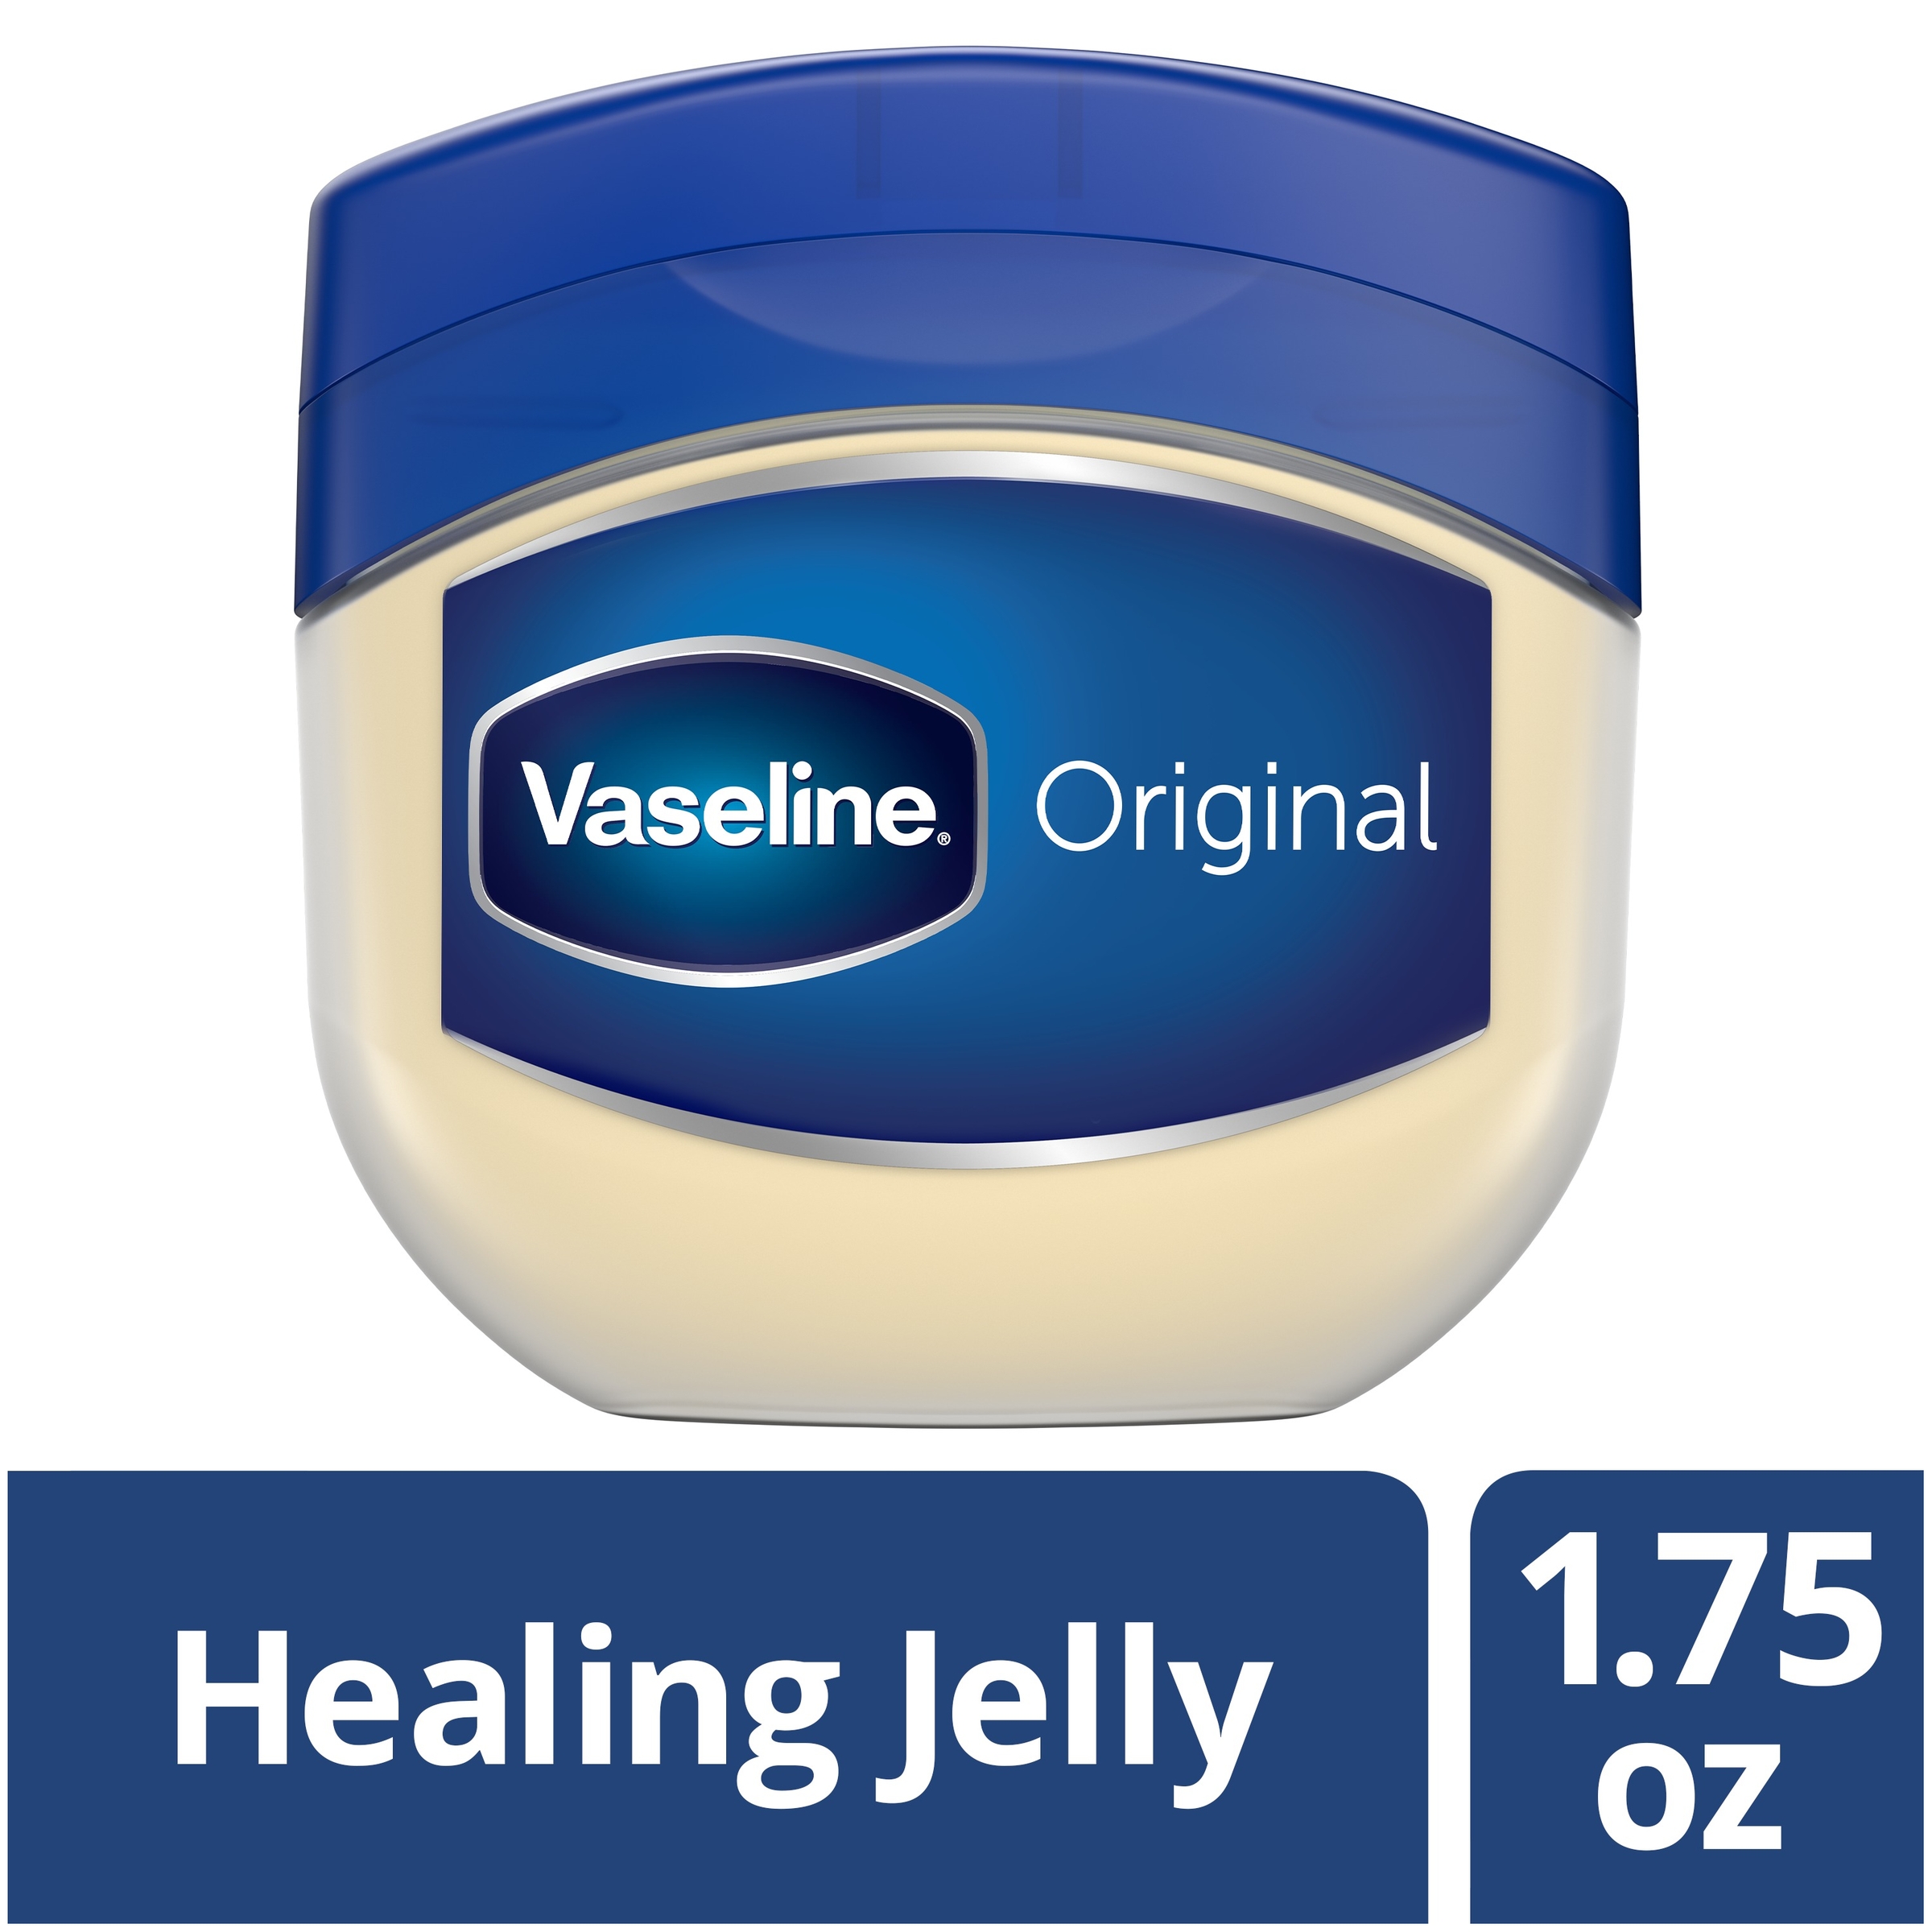 Vaseline 100% Pure Petroleum Jelly Original Vaseline 1.75 oz - image 4 of 7